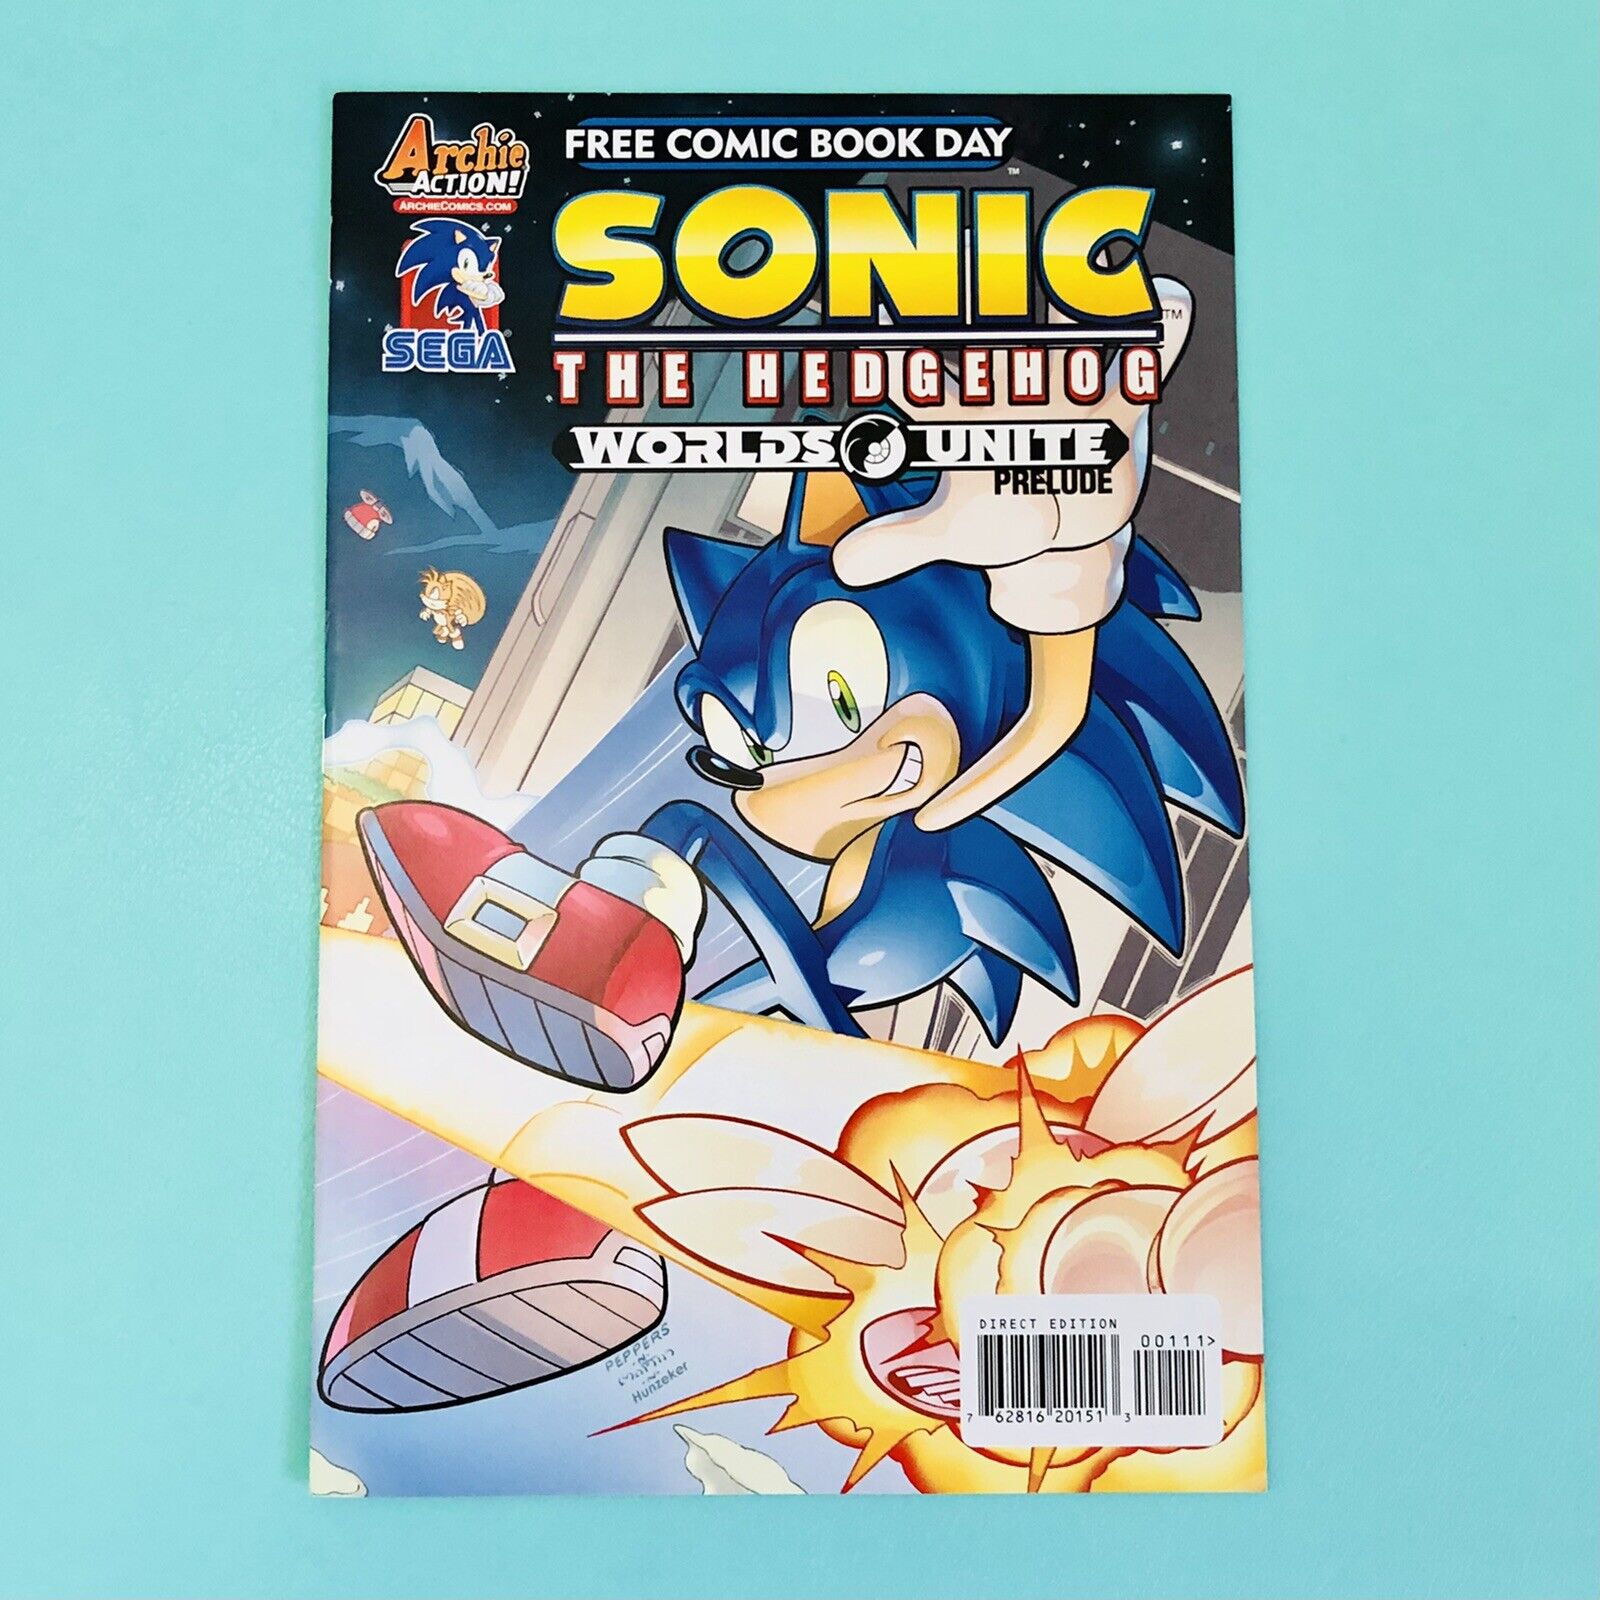 Sonic The Hedgehog / Mega Man Free Comic Book Day 2015 Worlds Unite Prelude NM+